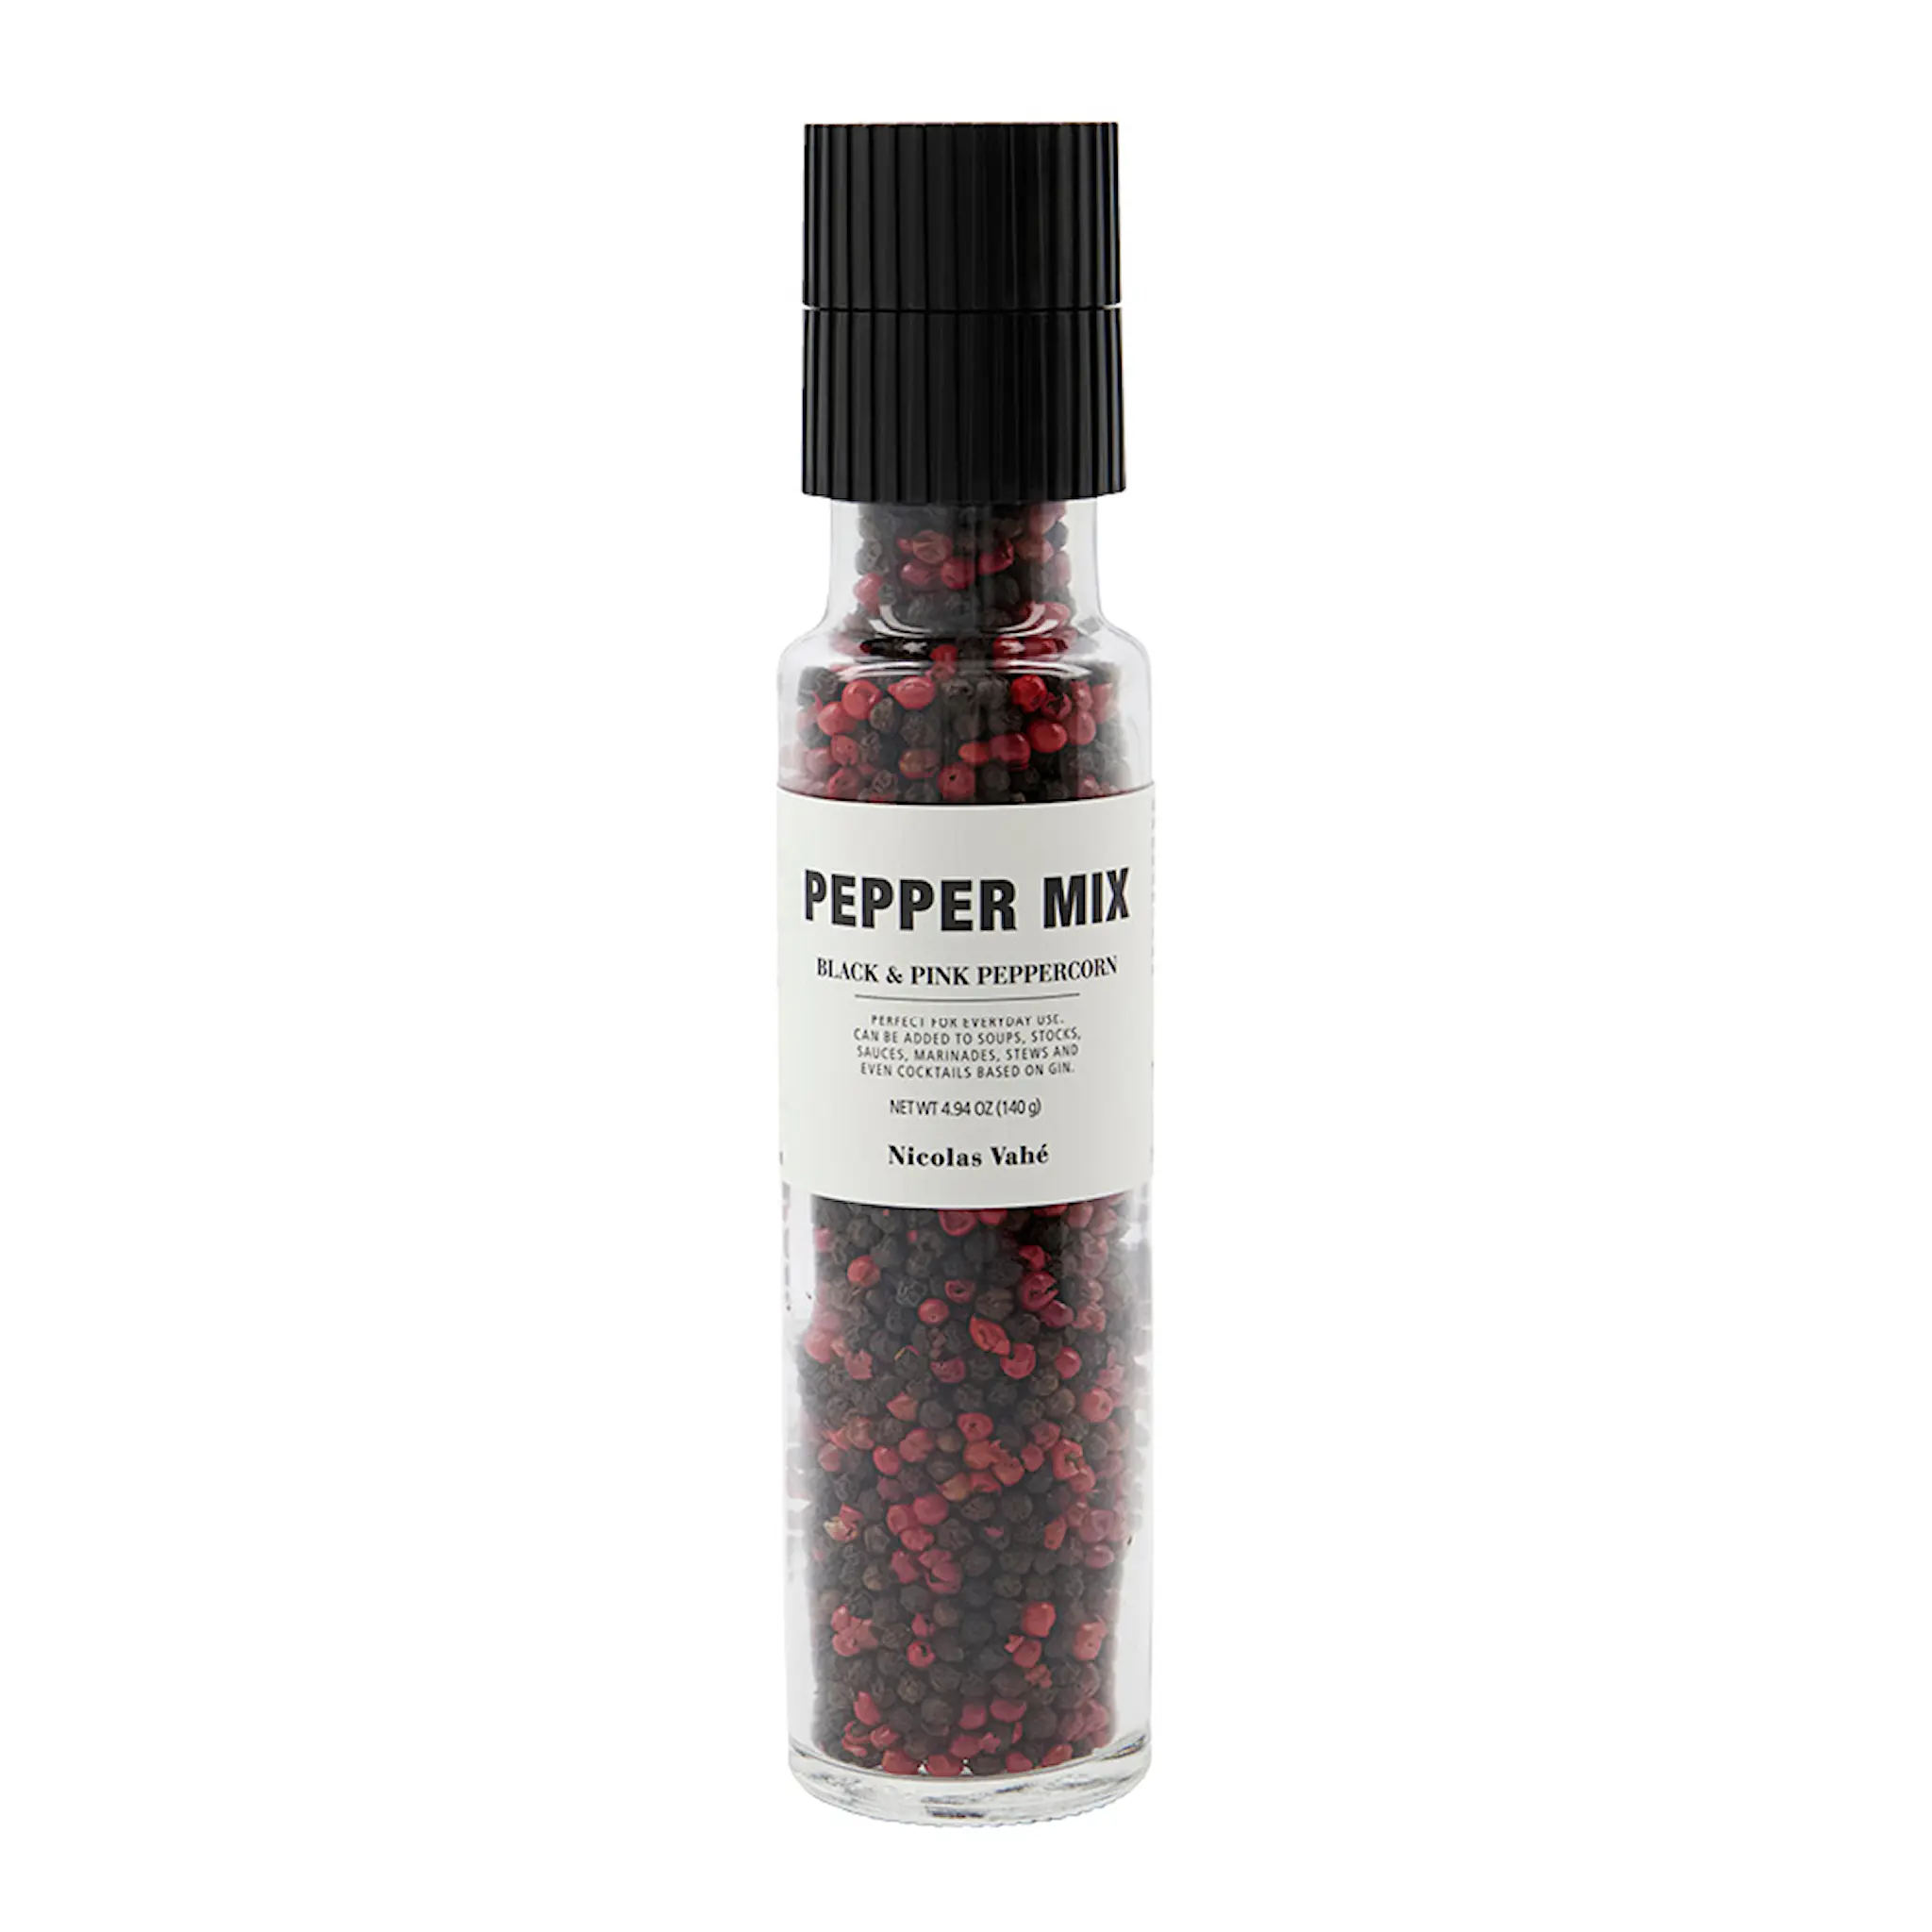 Nicolas Vahé Pepper mix svart&rosa 140g